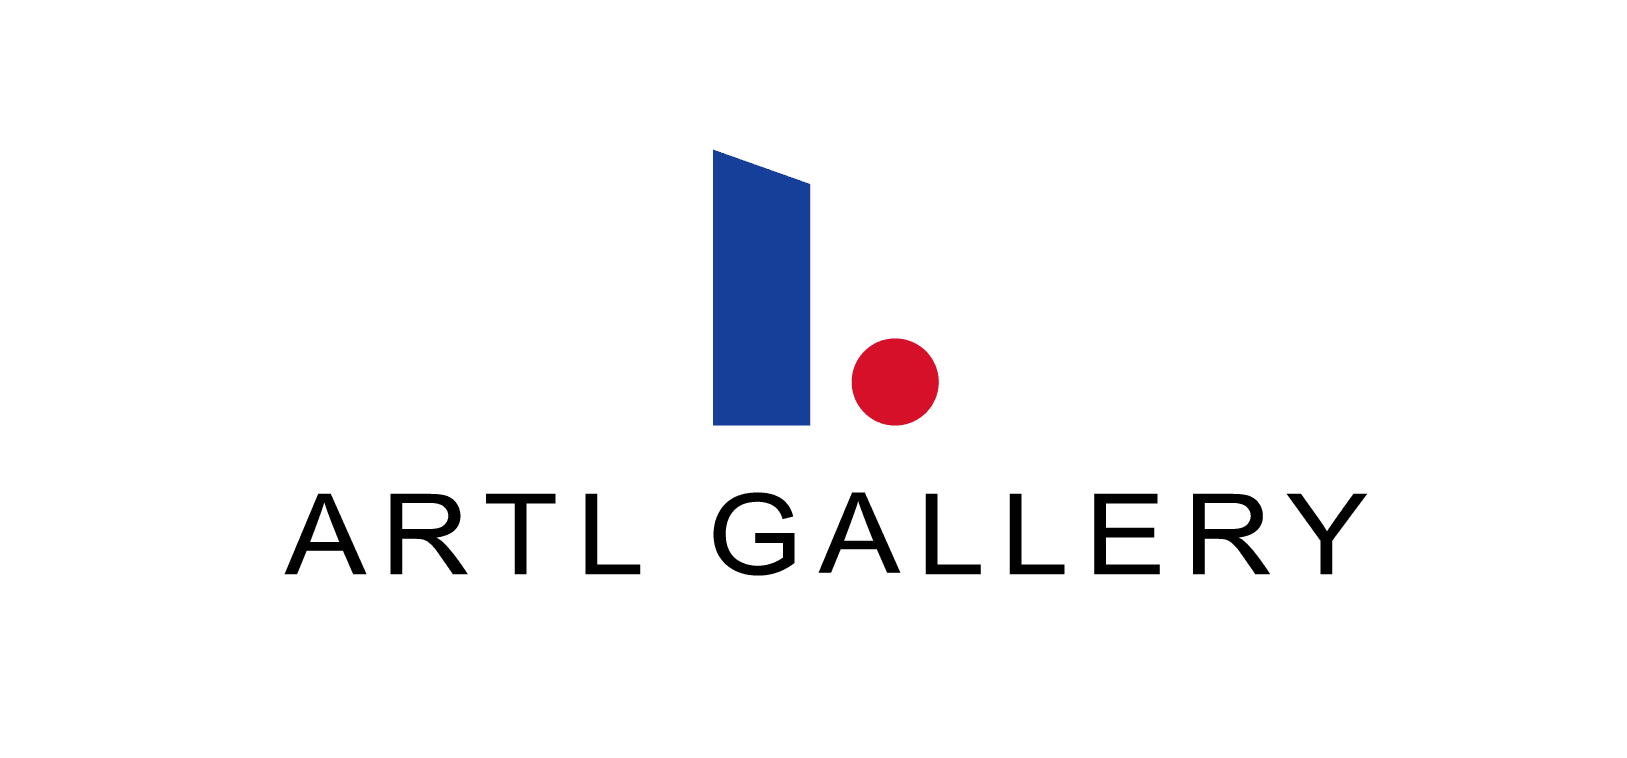 ARTL GALLERY company logo